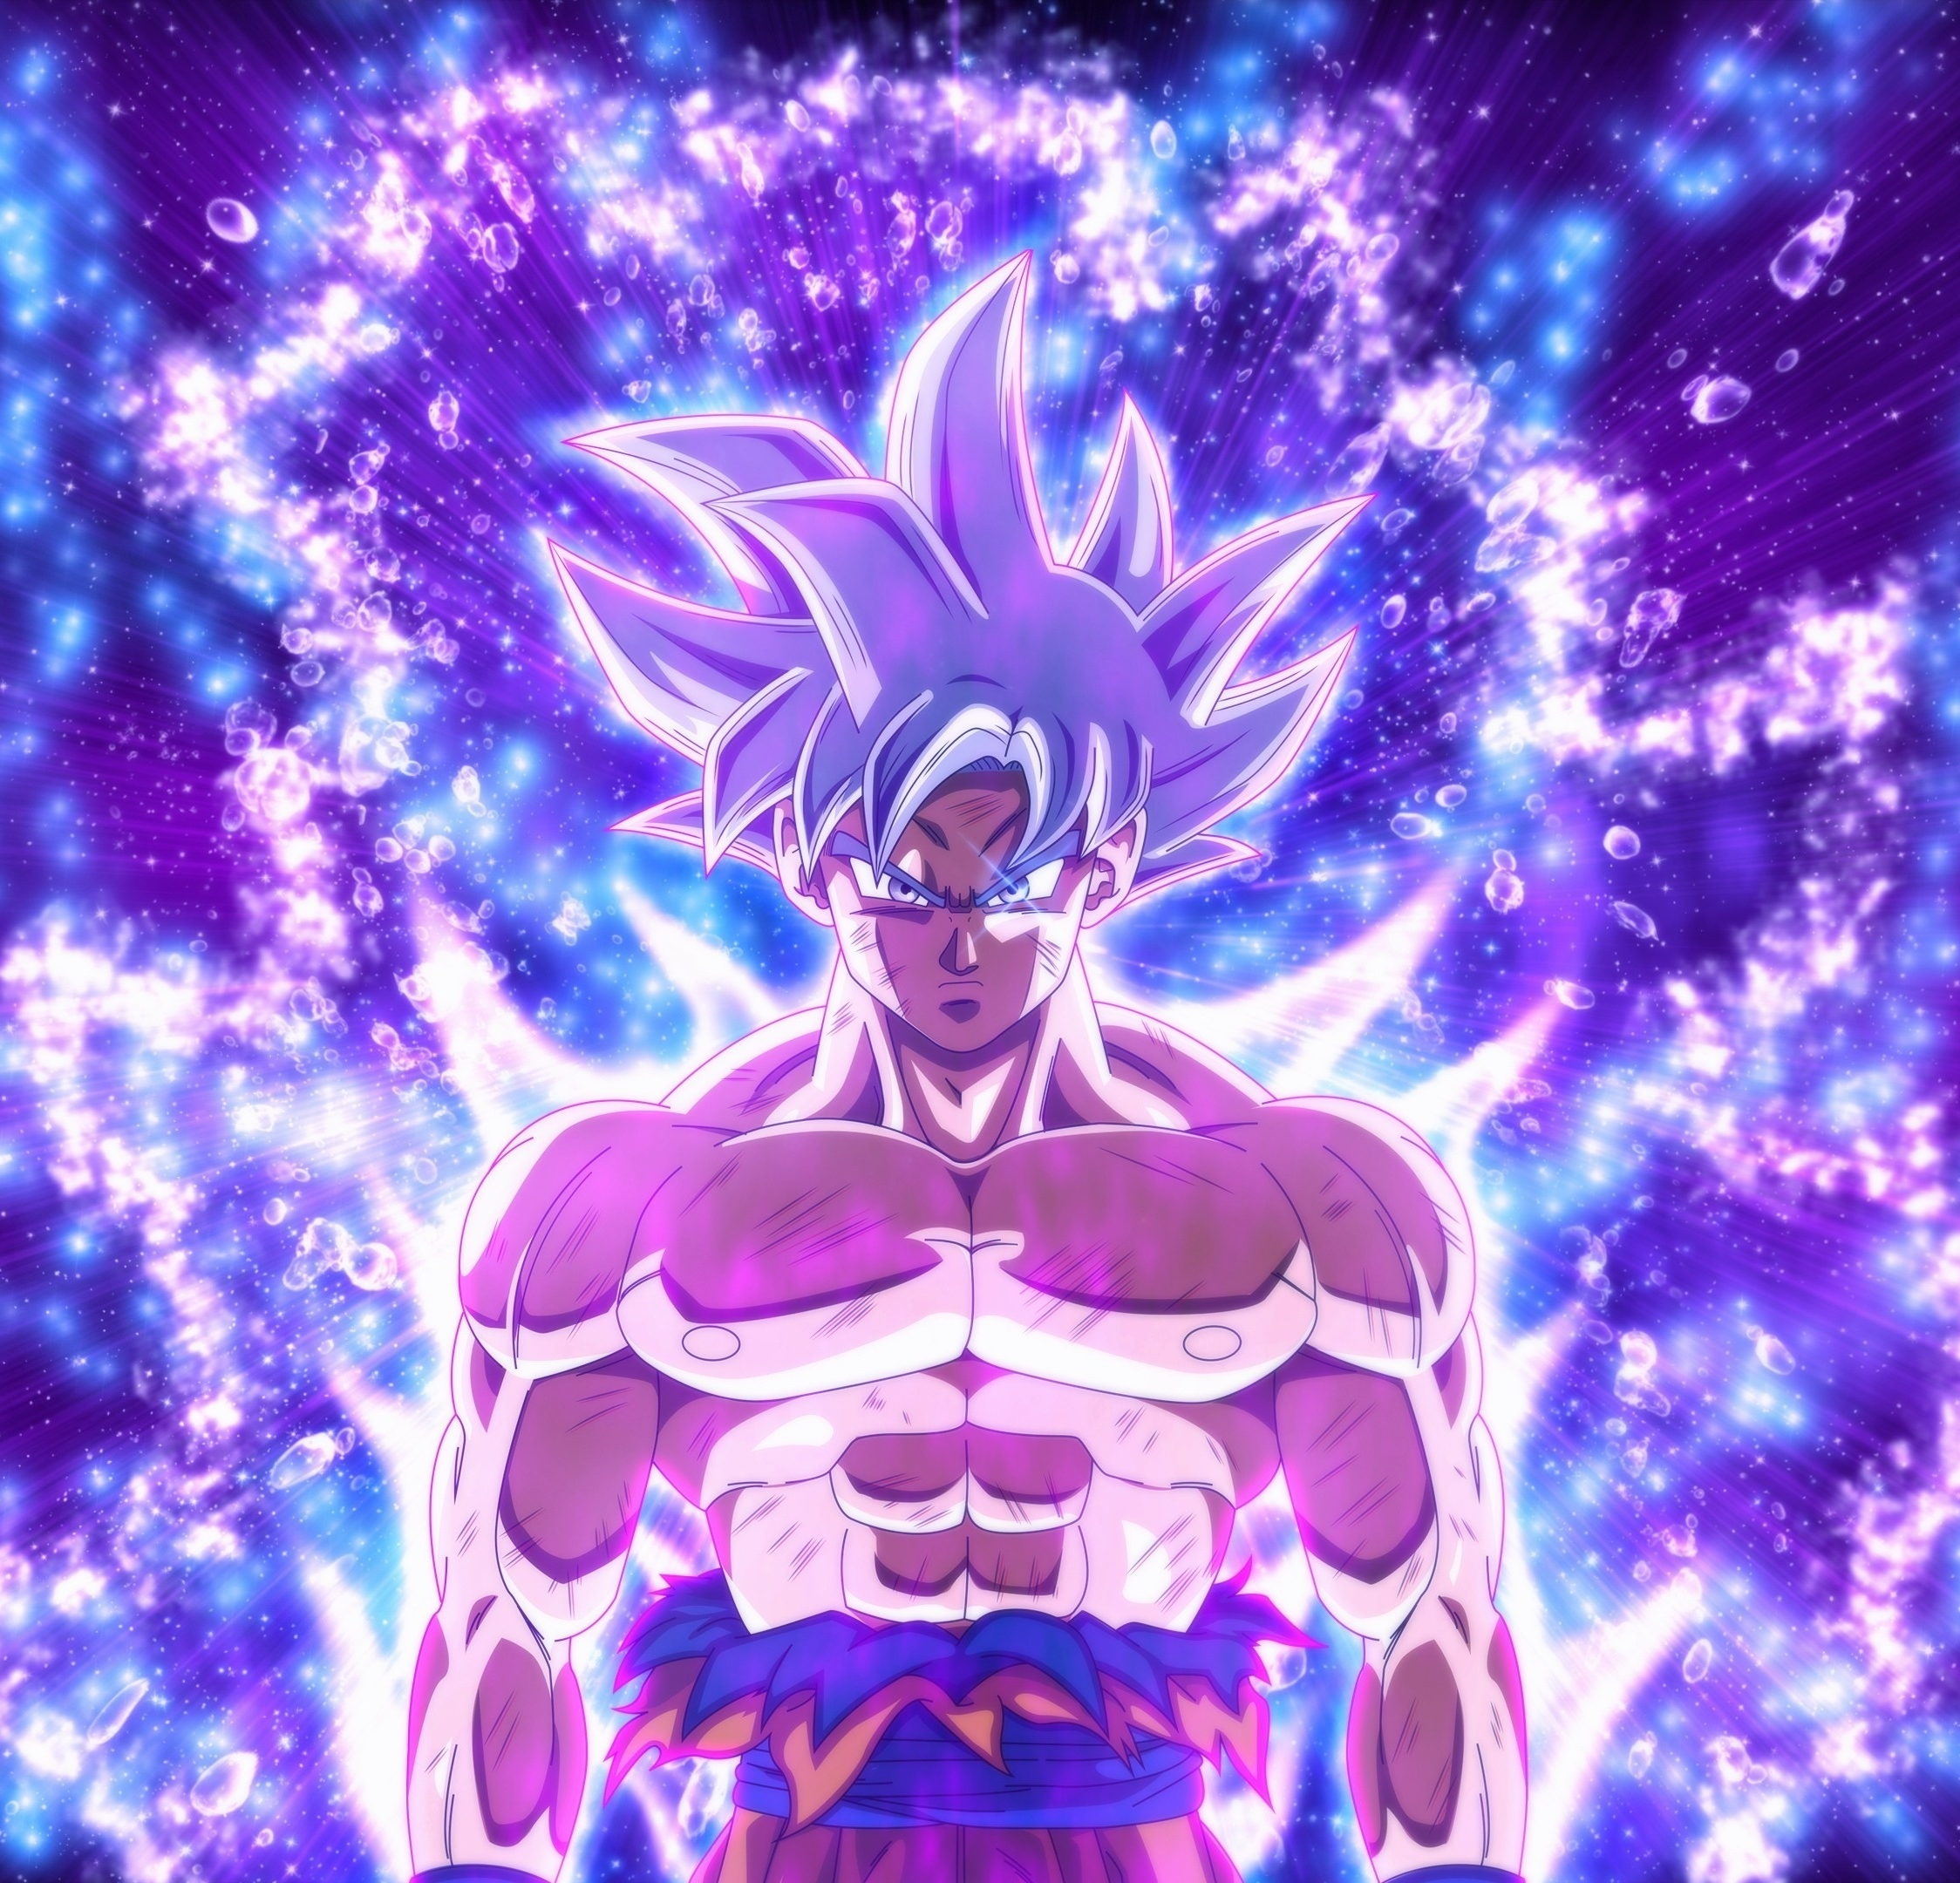 Anime Classic - Dragon Ball Z, Super Saiyan Son Goku 4K wallpaper download